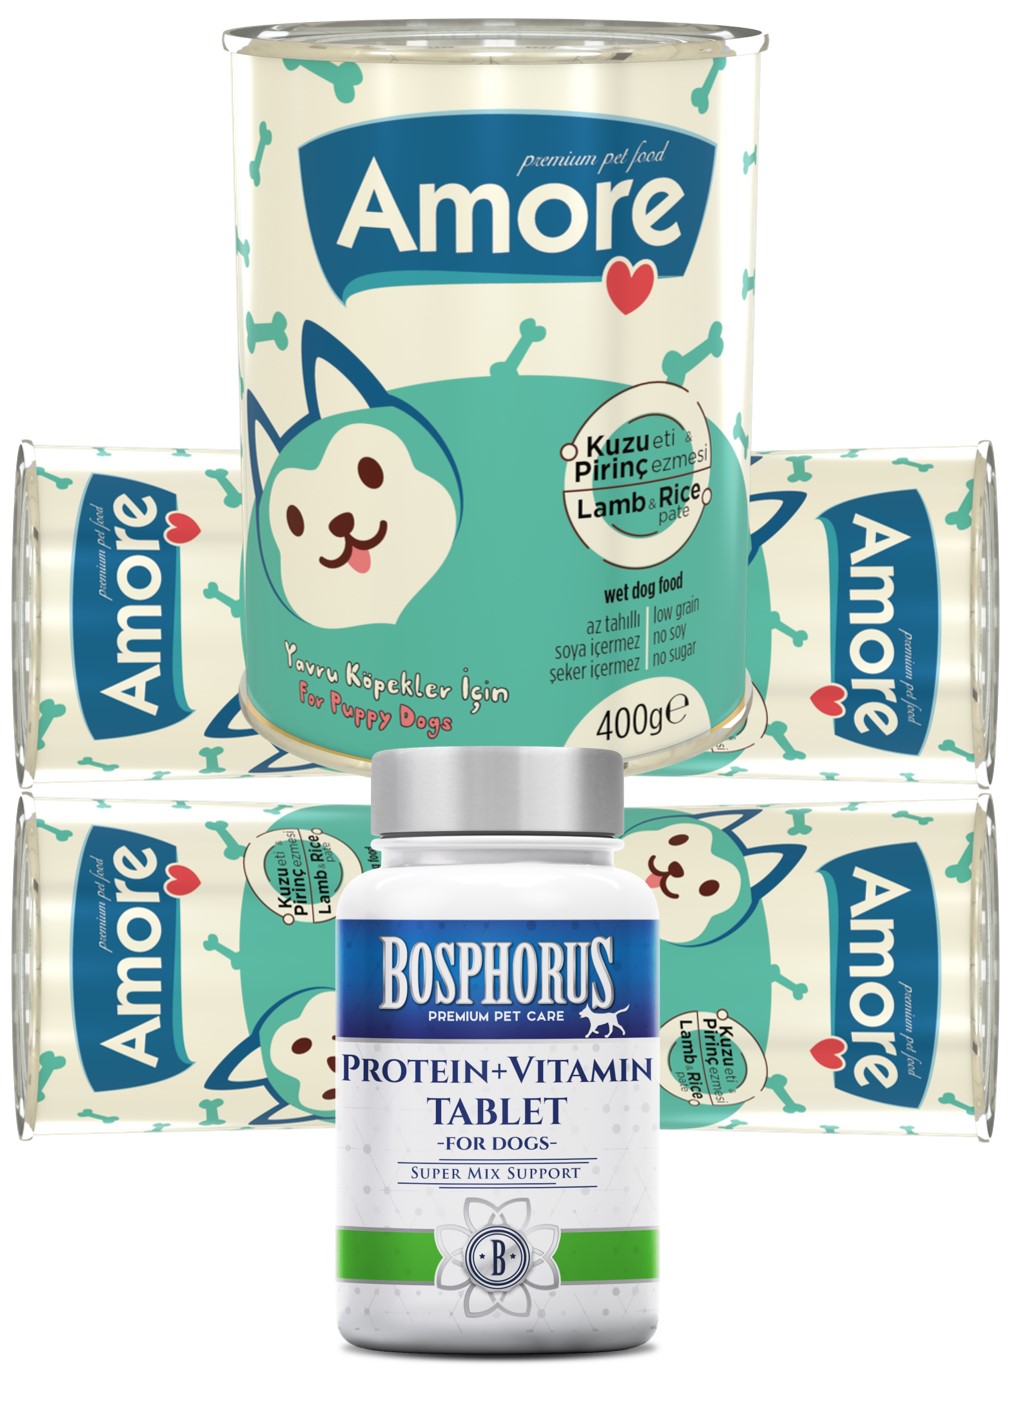 Amoredog Kuzu Etli Pirinçli Yavru Köpek Konservesi 5 Adet + Bosphorus Protein Vitamin Tablet